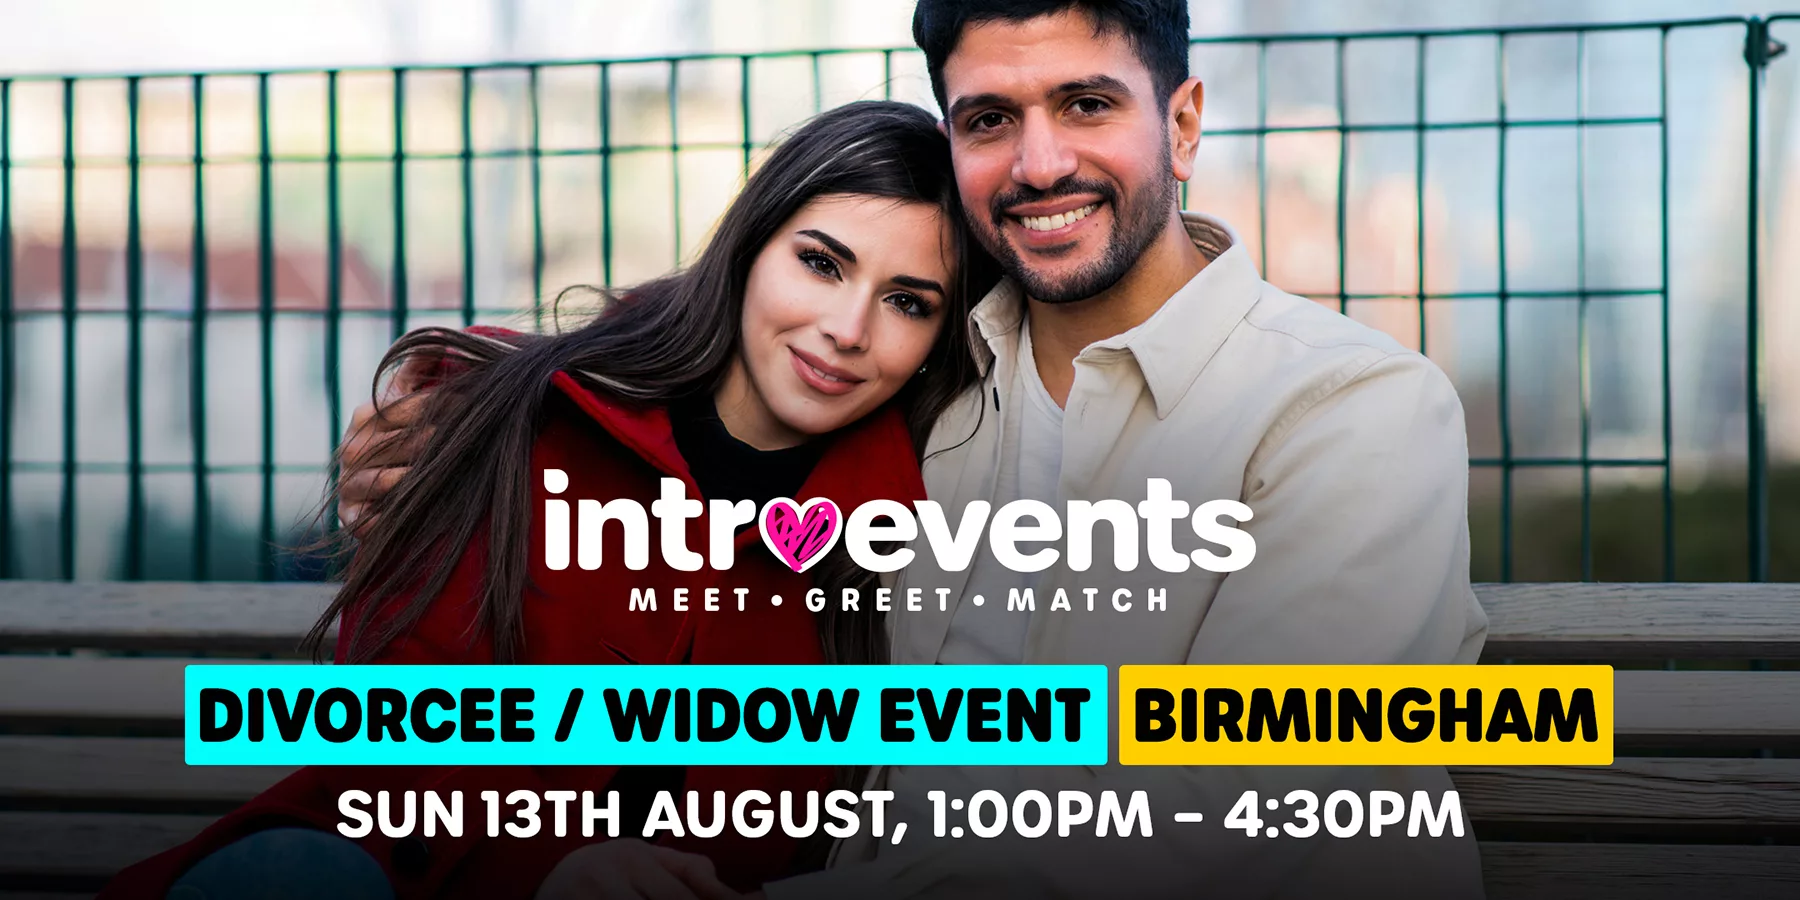 Muslim Marriage Events Birmingham - Divorcee / Widow